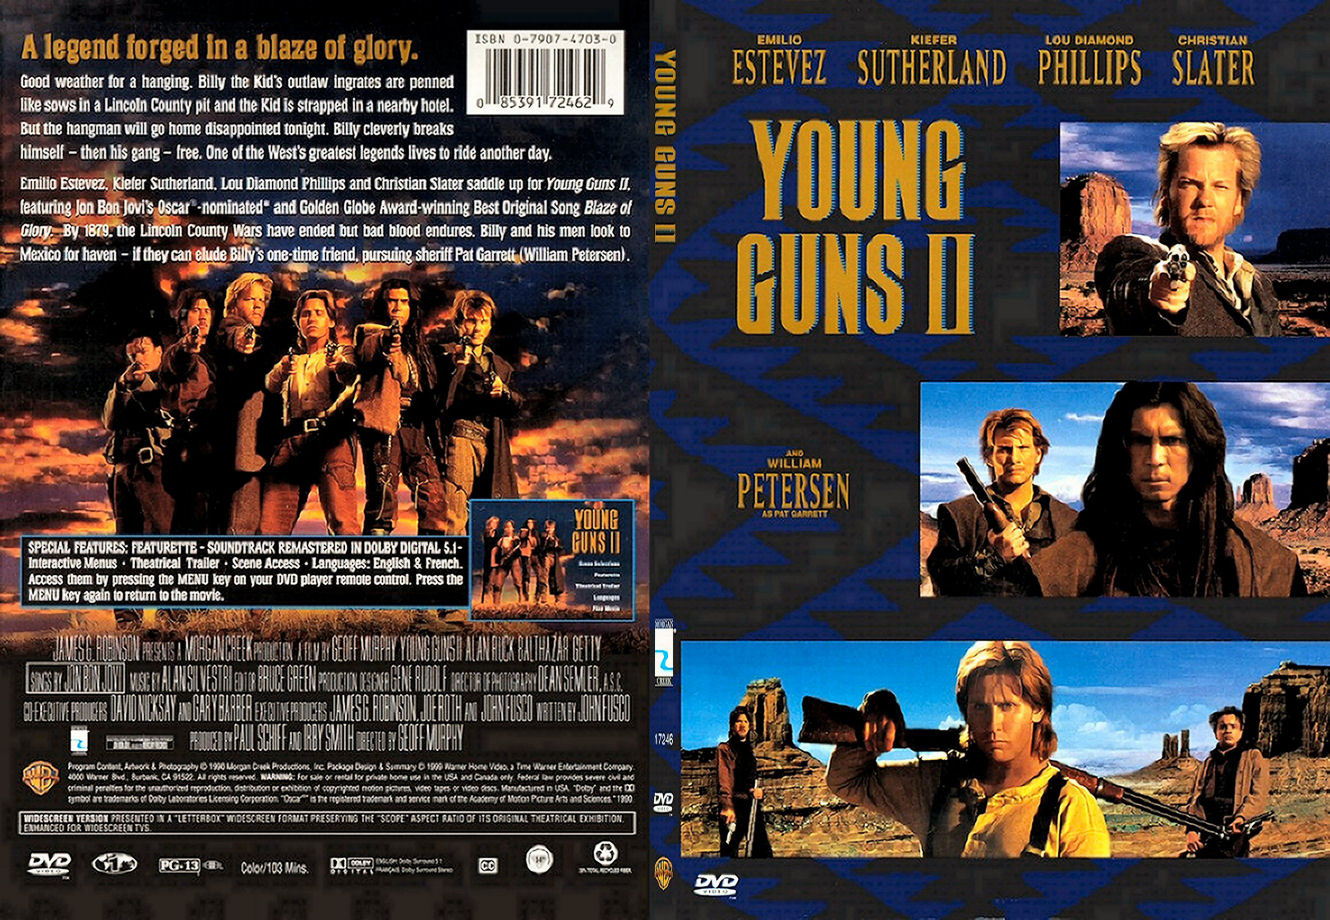 Jaquette DVD Young guns II - SLIM